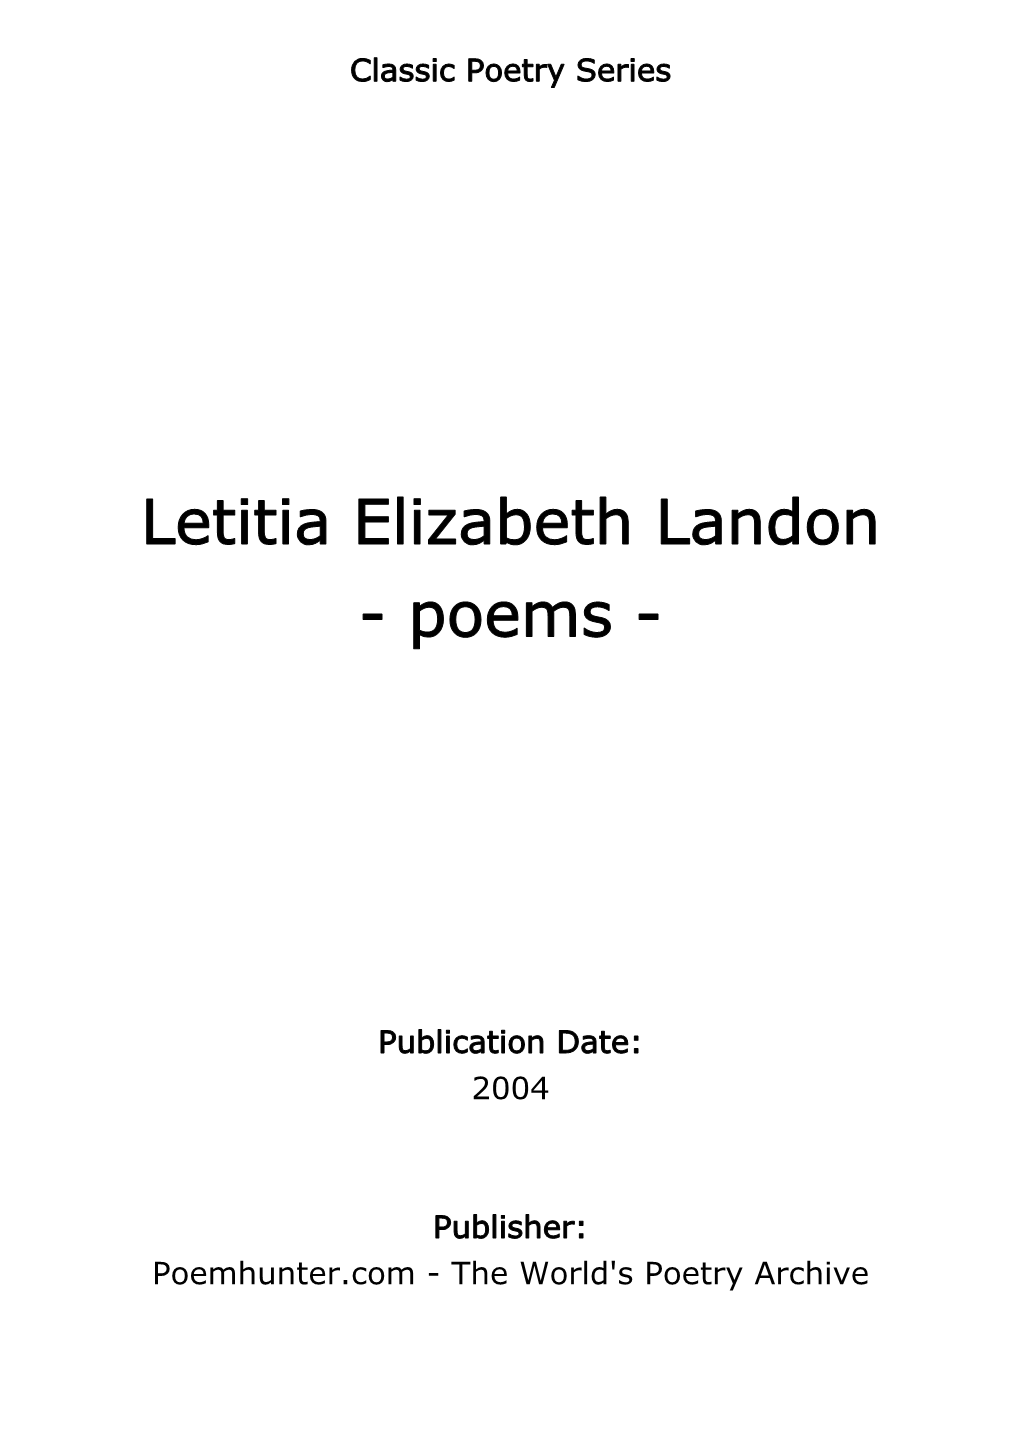 Letitia Elizabeth Landon - Poems